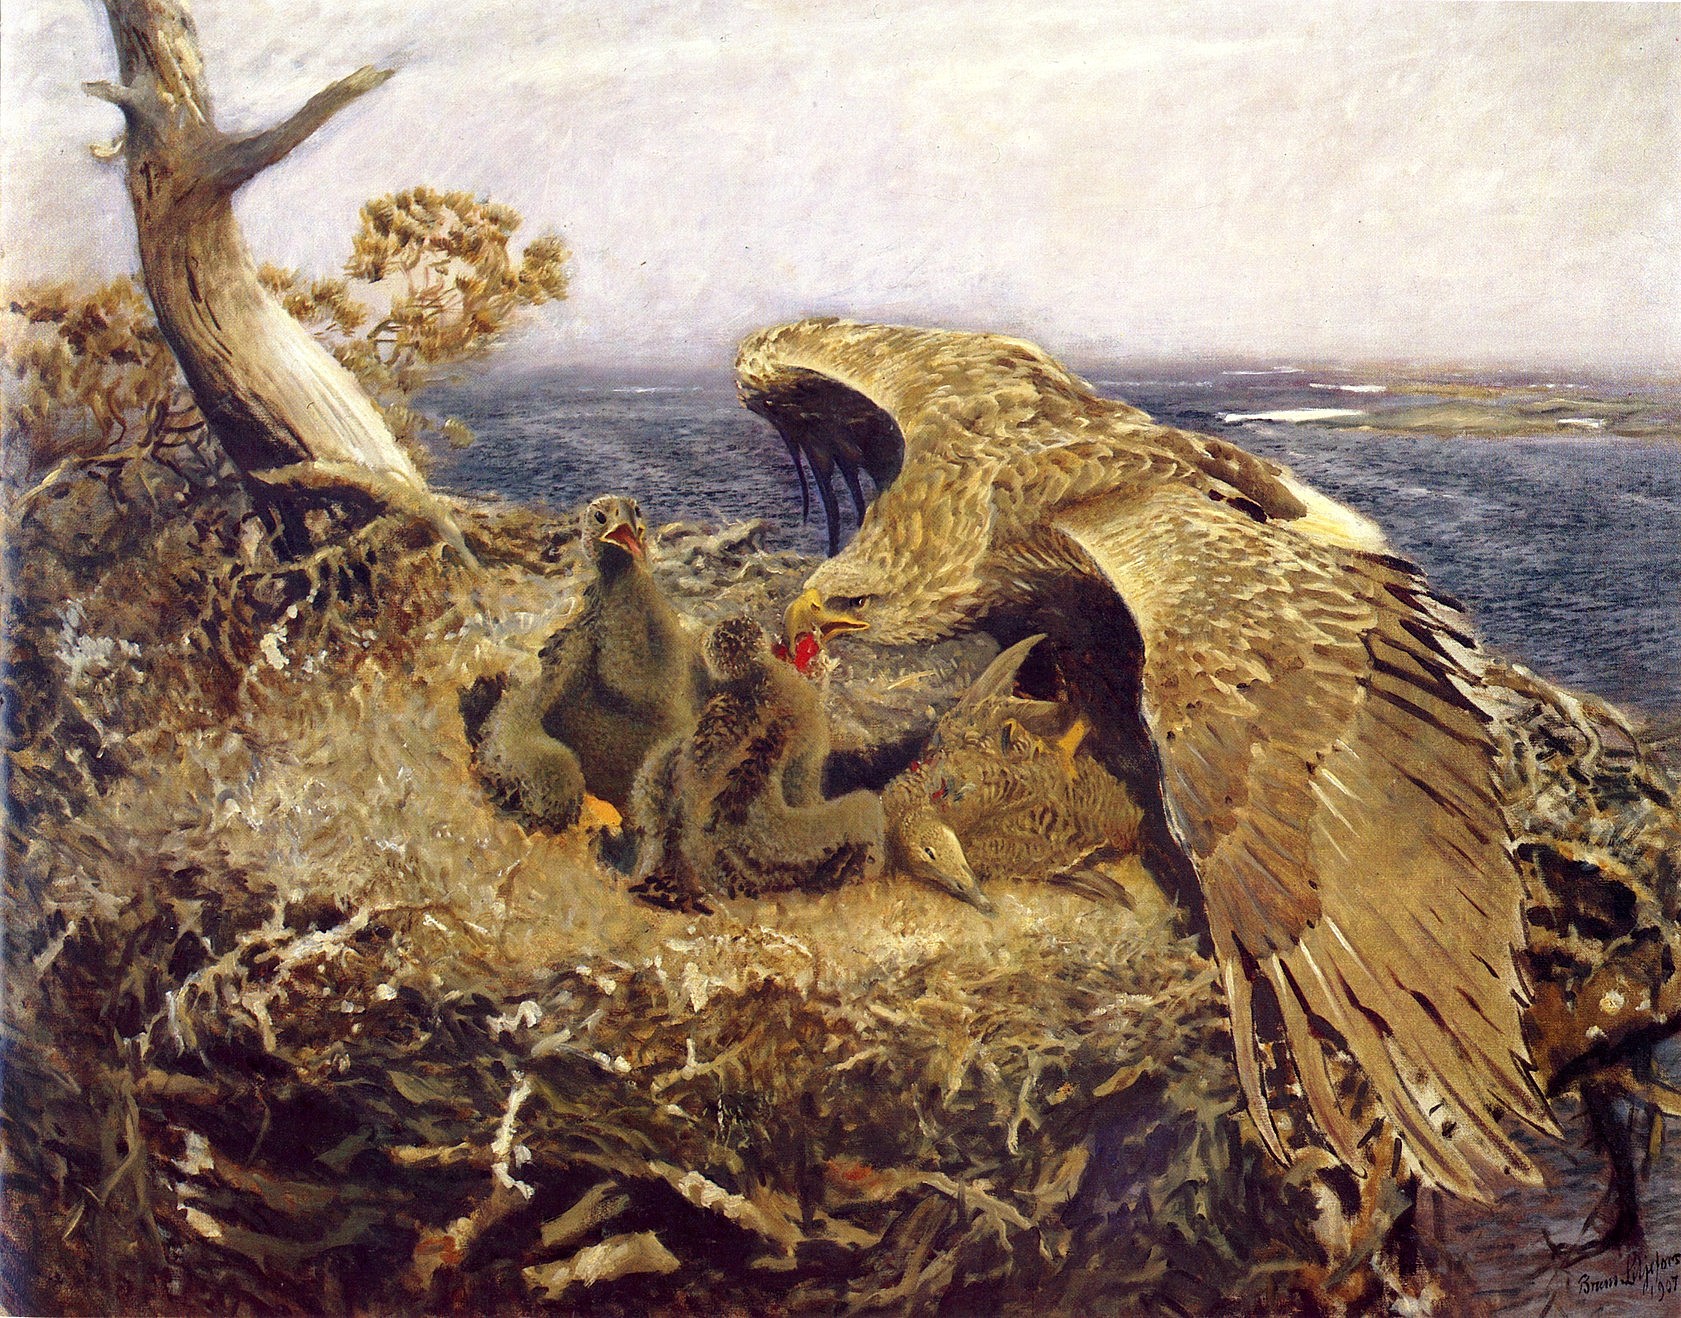 File:Bruno Liljefors - Sea Eagles Nest.jpg - Wikimedia Commons